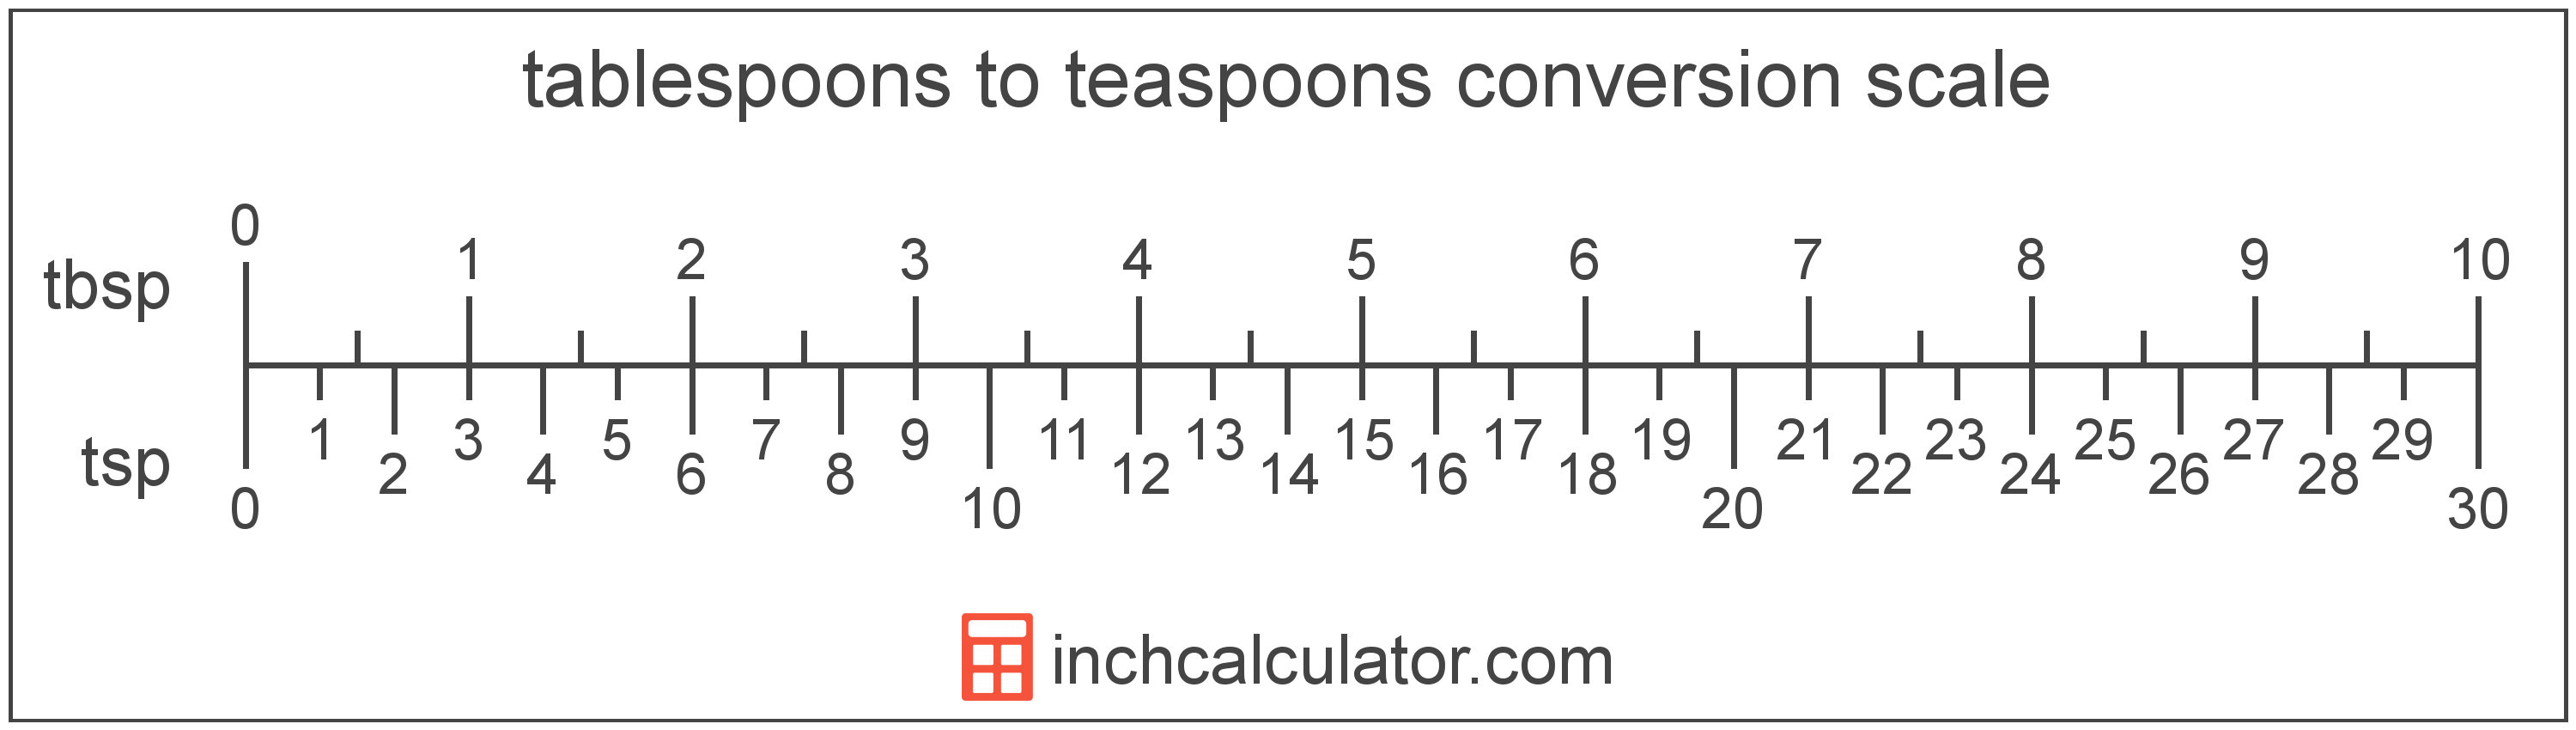 Ml Teaspoon Conversion Chart